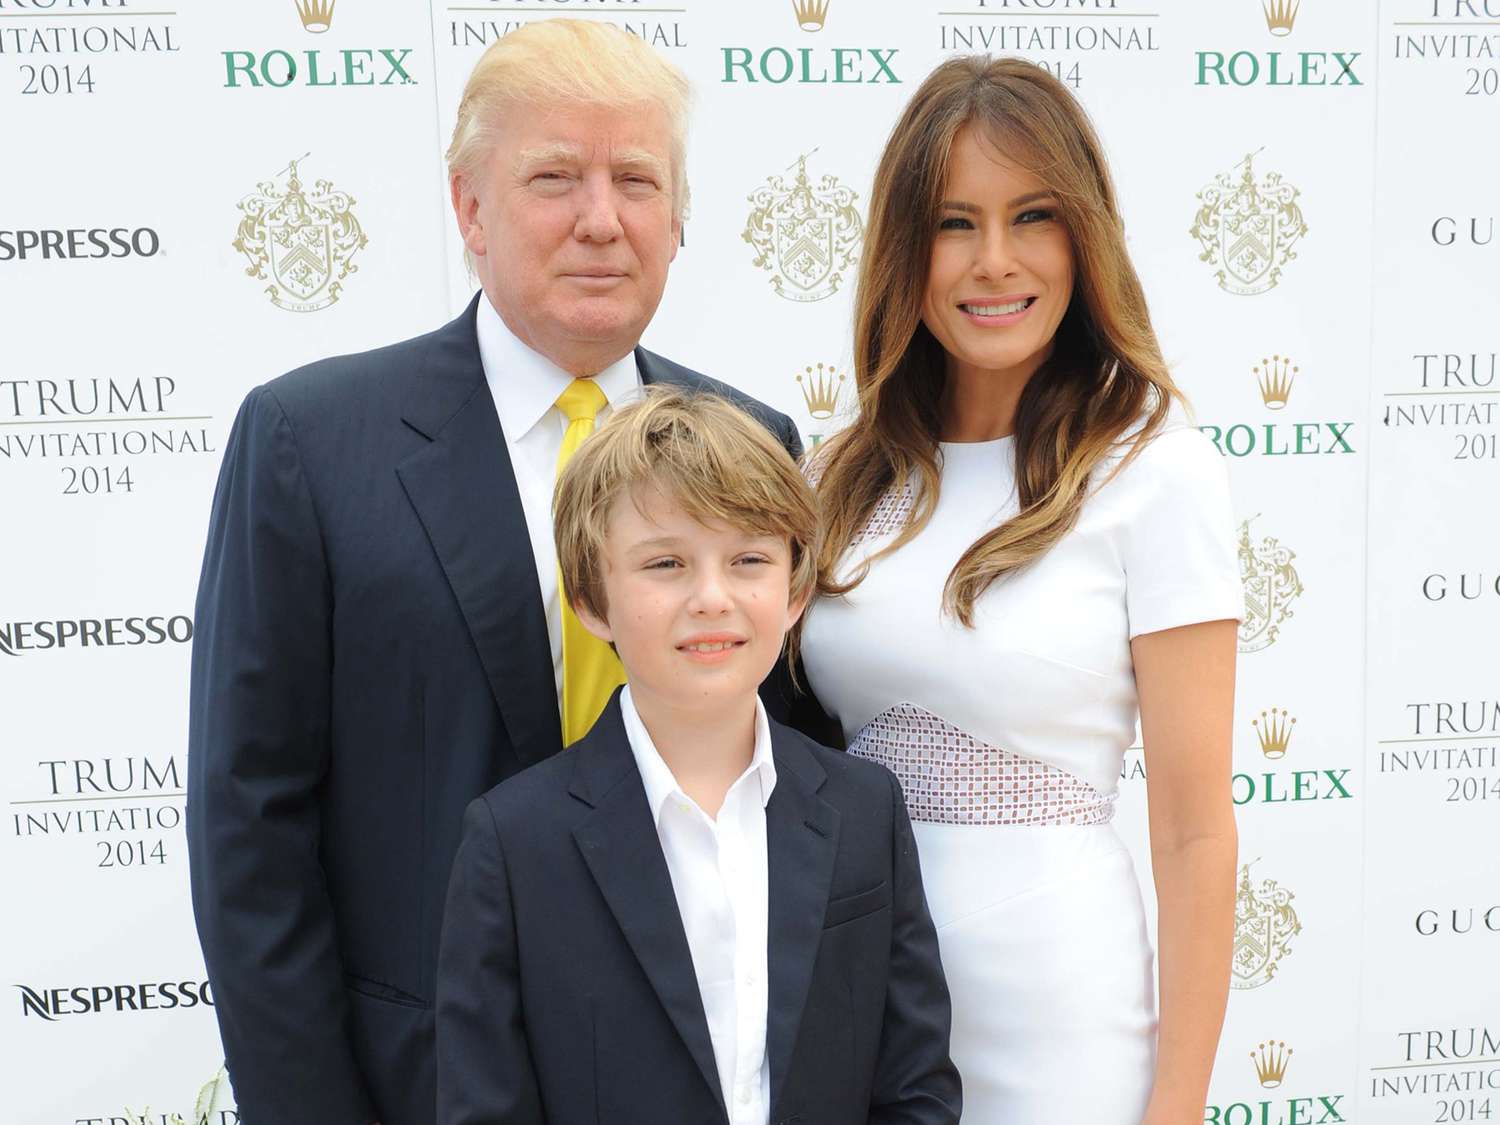 Donald Trump, his son Barron, and wife Melania at the $125,000 Trump Invitational Grand Prix